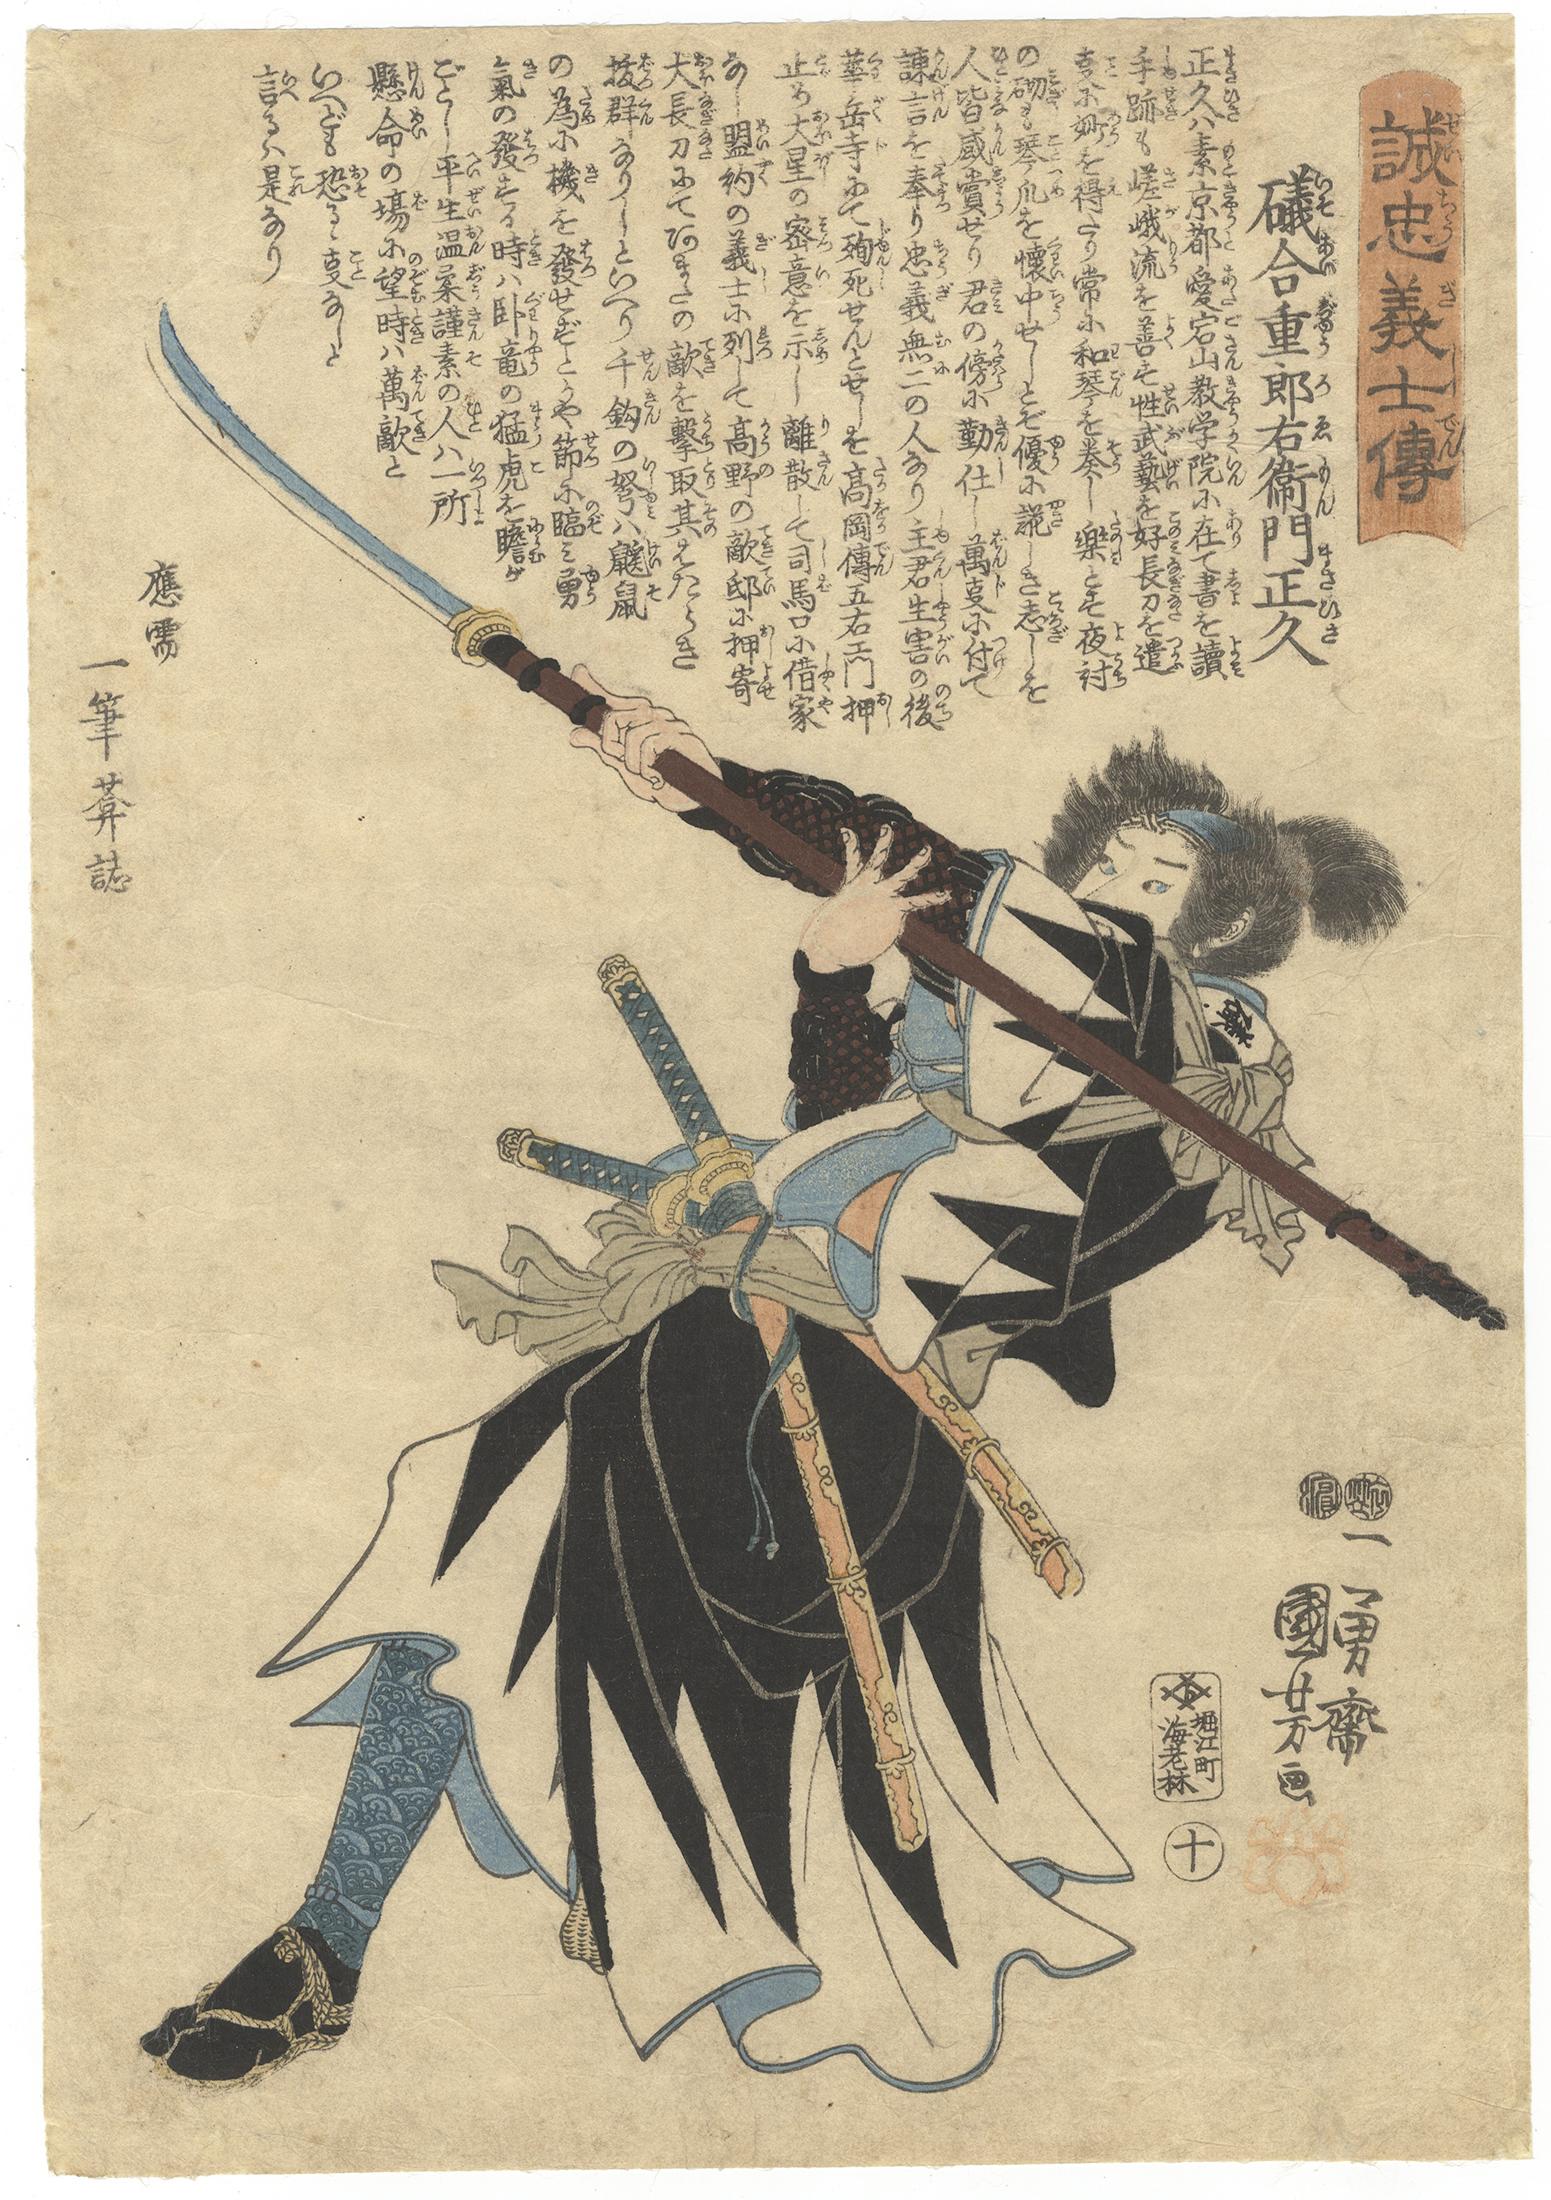 Utagawa Kuniyoshi Portrait Print - Kuniyoshi Utagawa, 47 Ronin, Original Japanese Woodblock Print, Ukiyo-e, Edo 